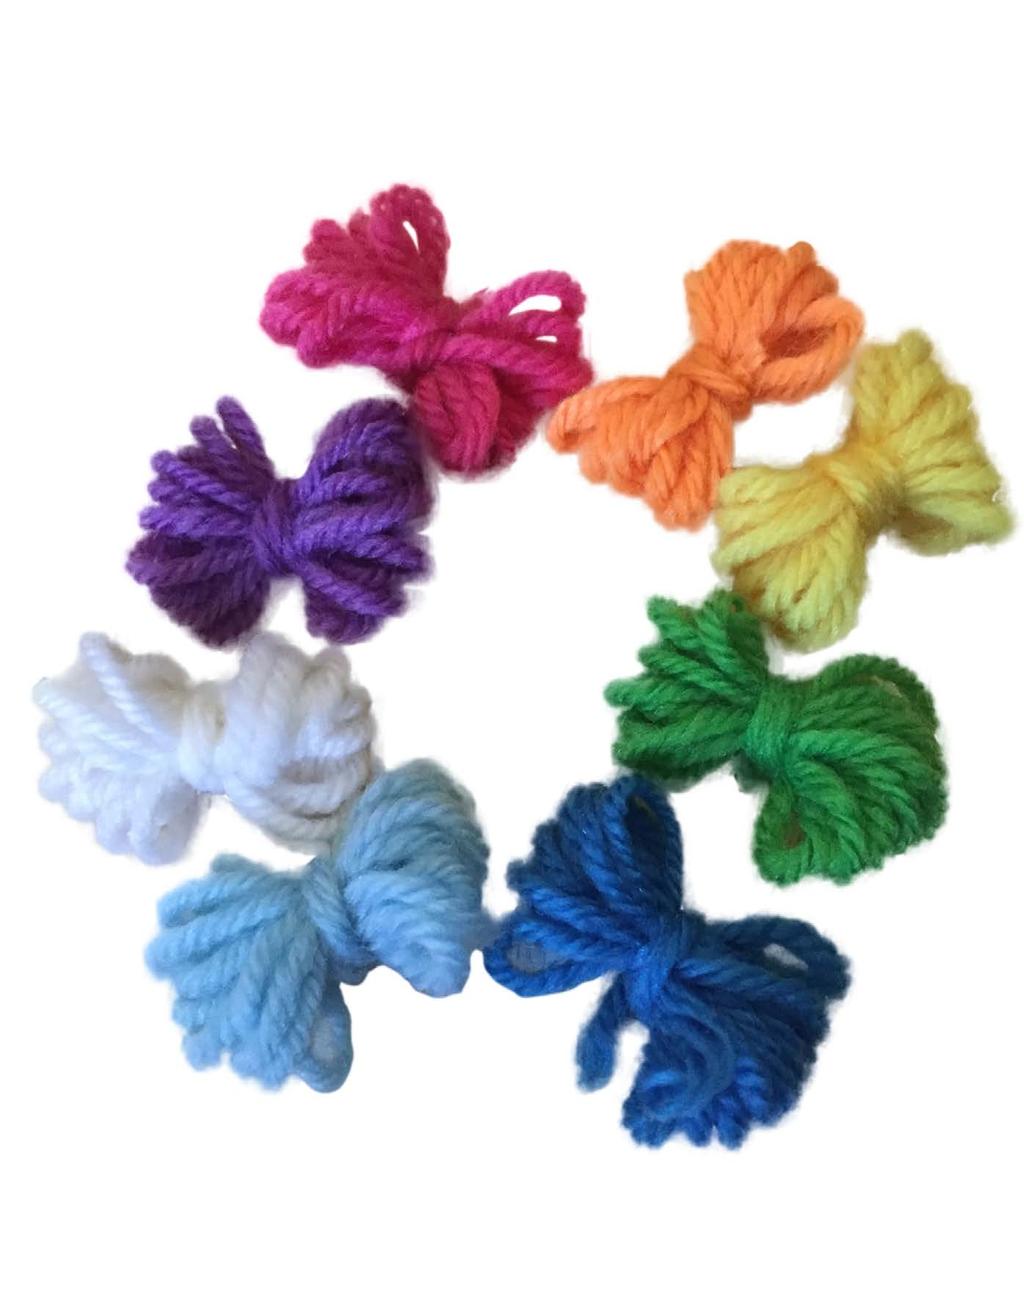 Yarn Hair Bows Materials needed: Yarn Hair clip